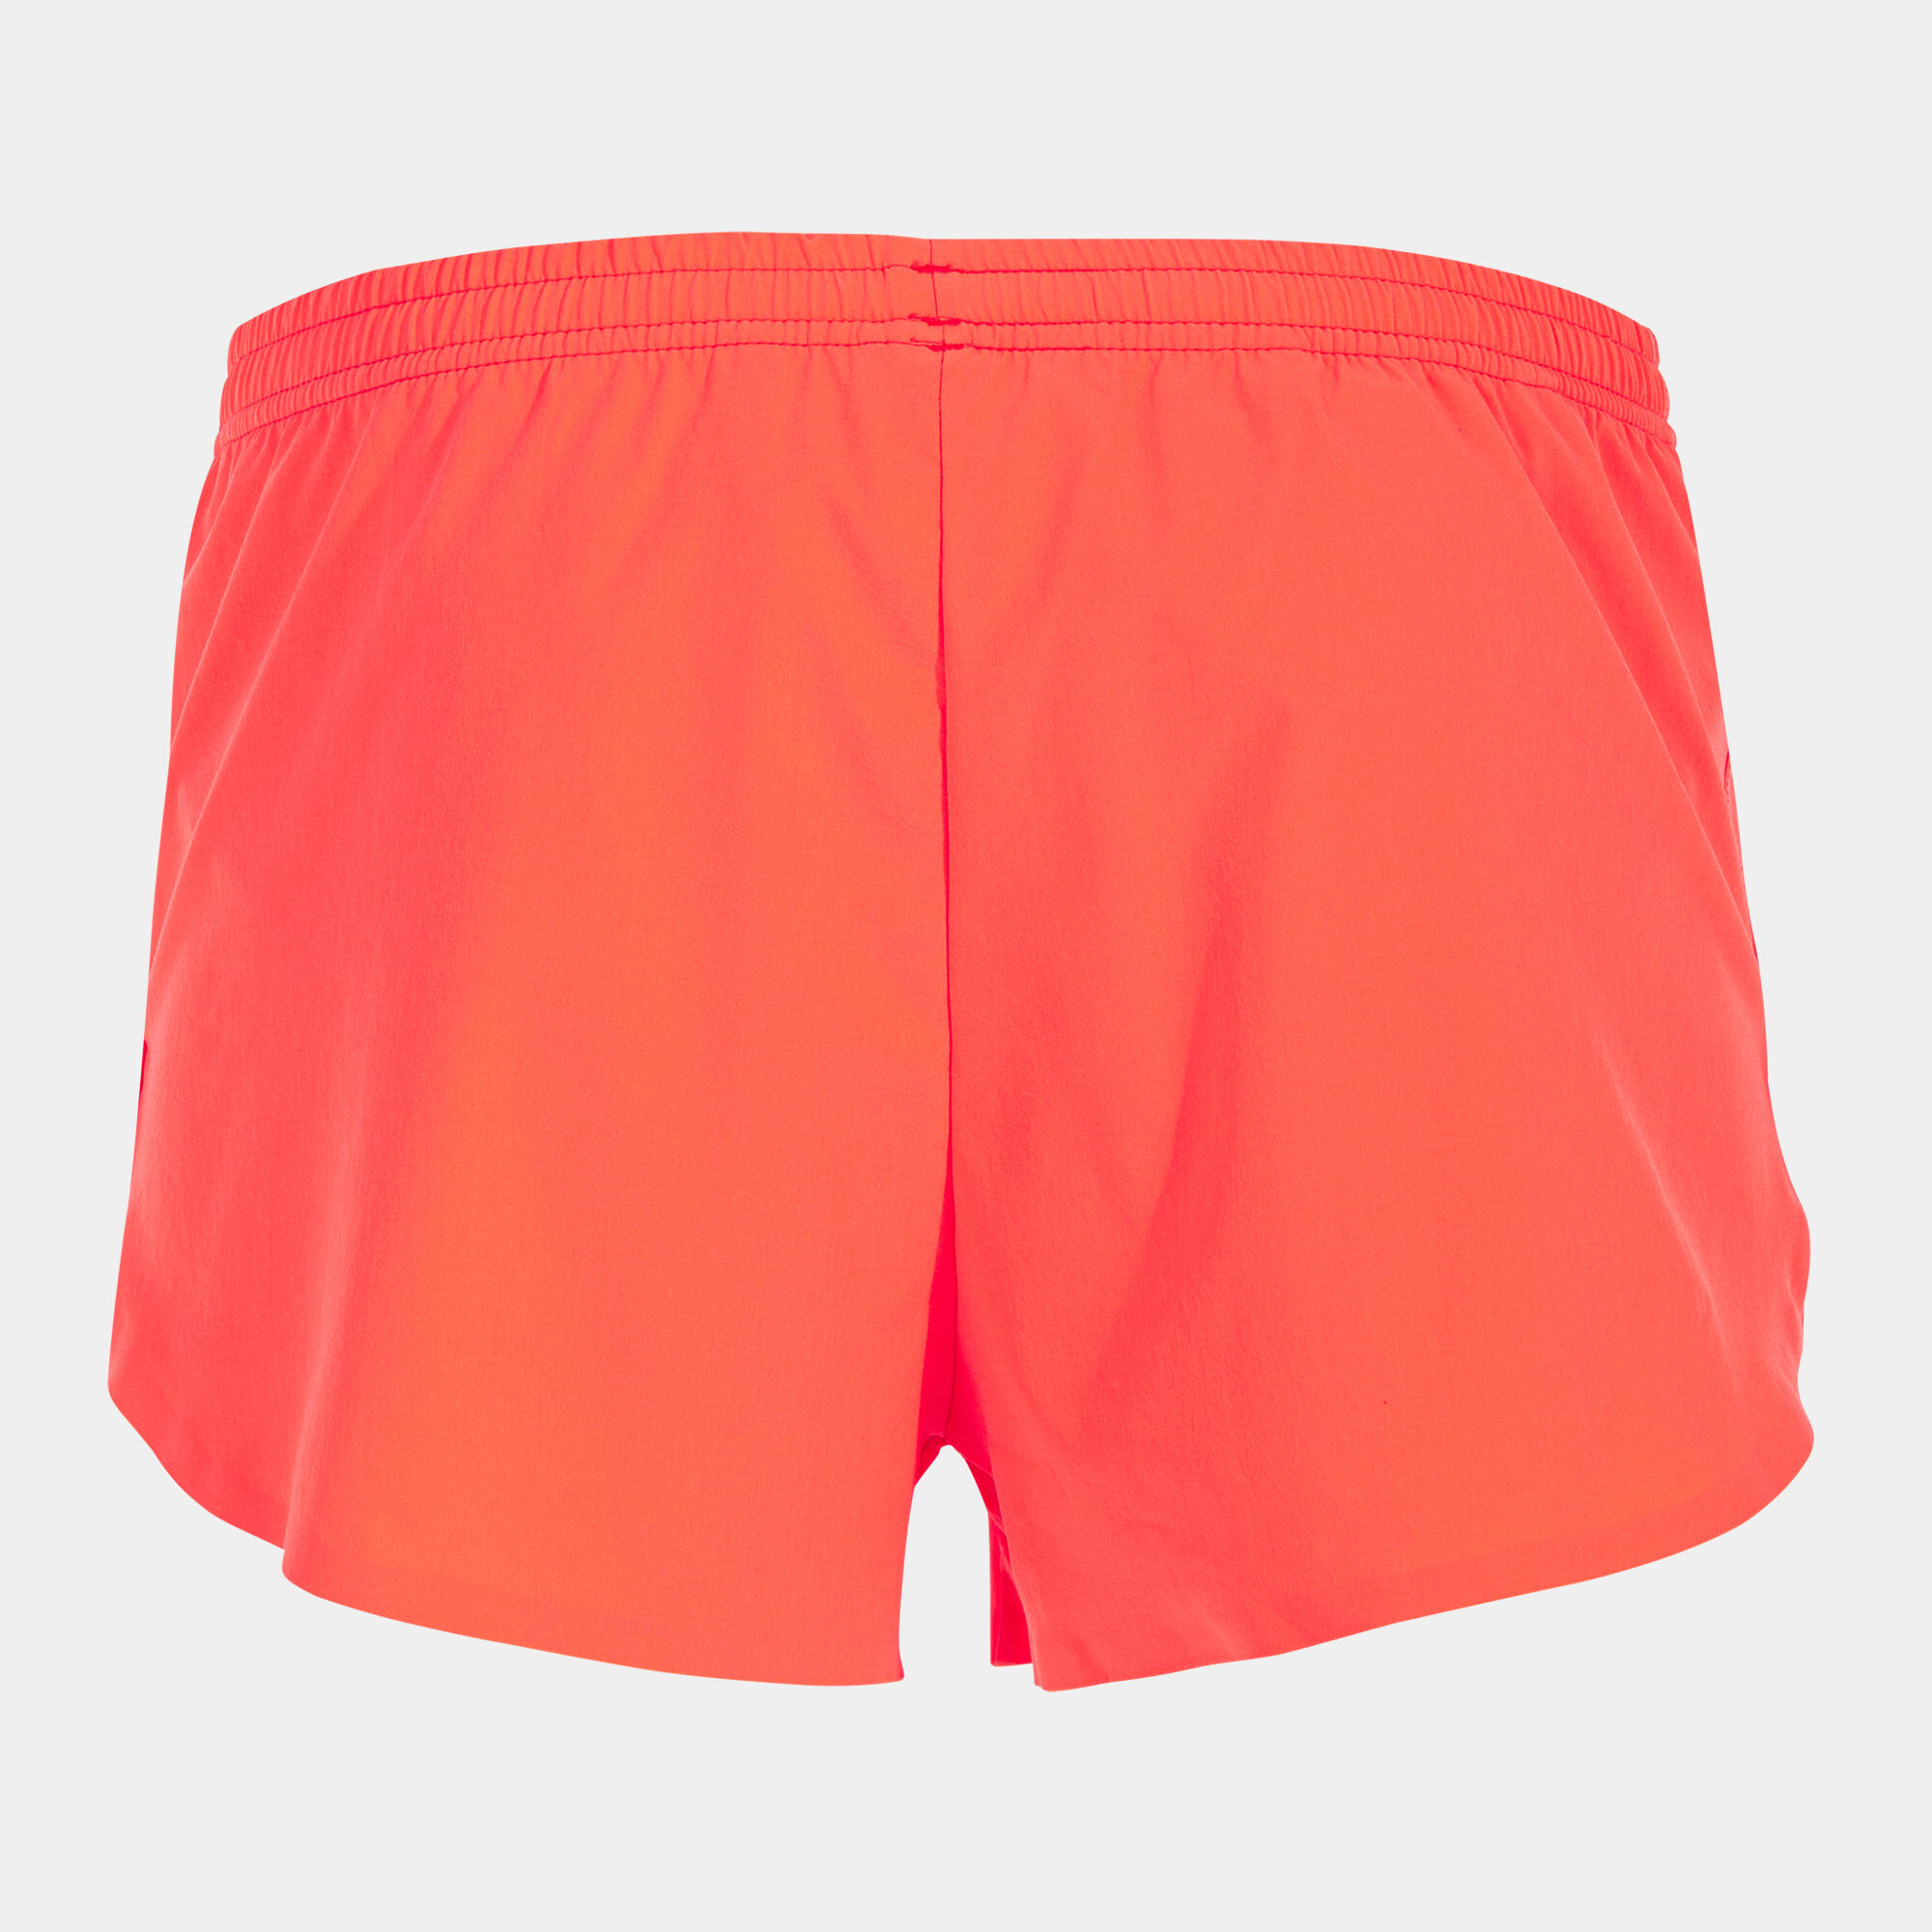 Shorts man Olimpia fluorescent coral